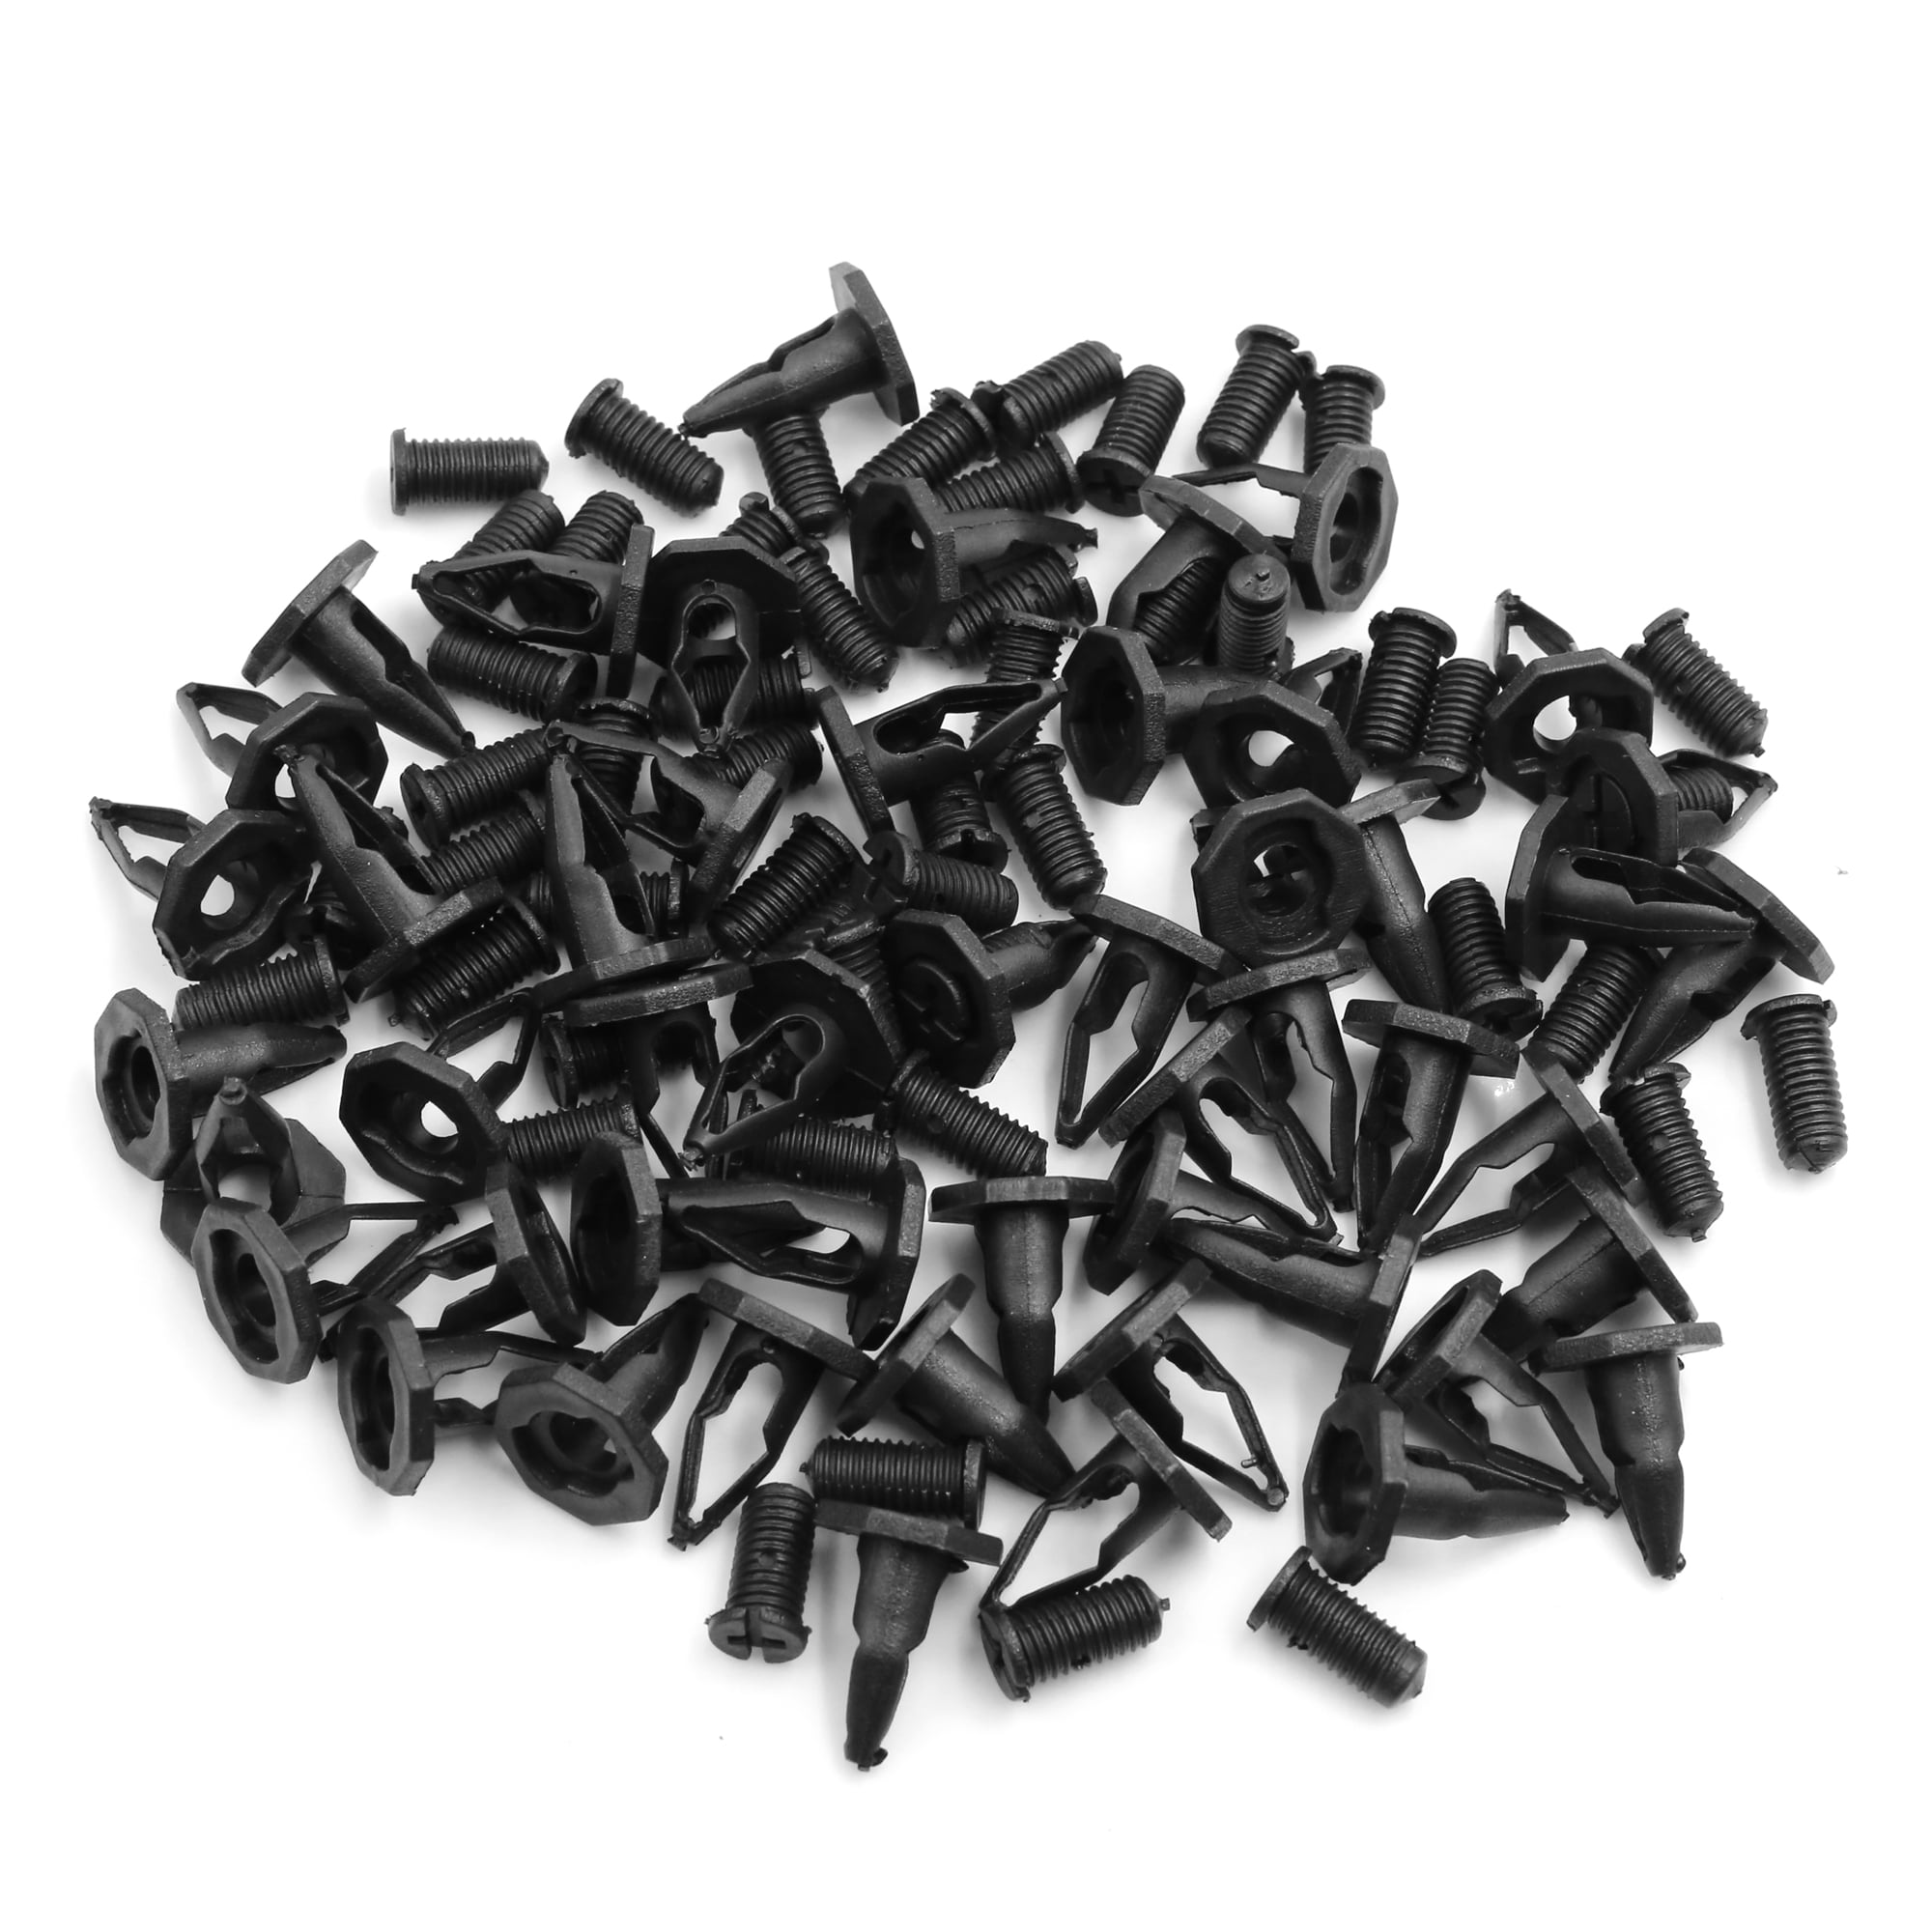 Disassemble Black Nylon Push Rivets Fasteners for 3.0-4.0mm Thick Panel R3055 